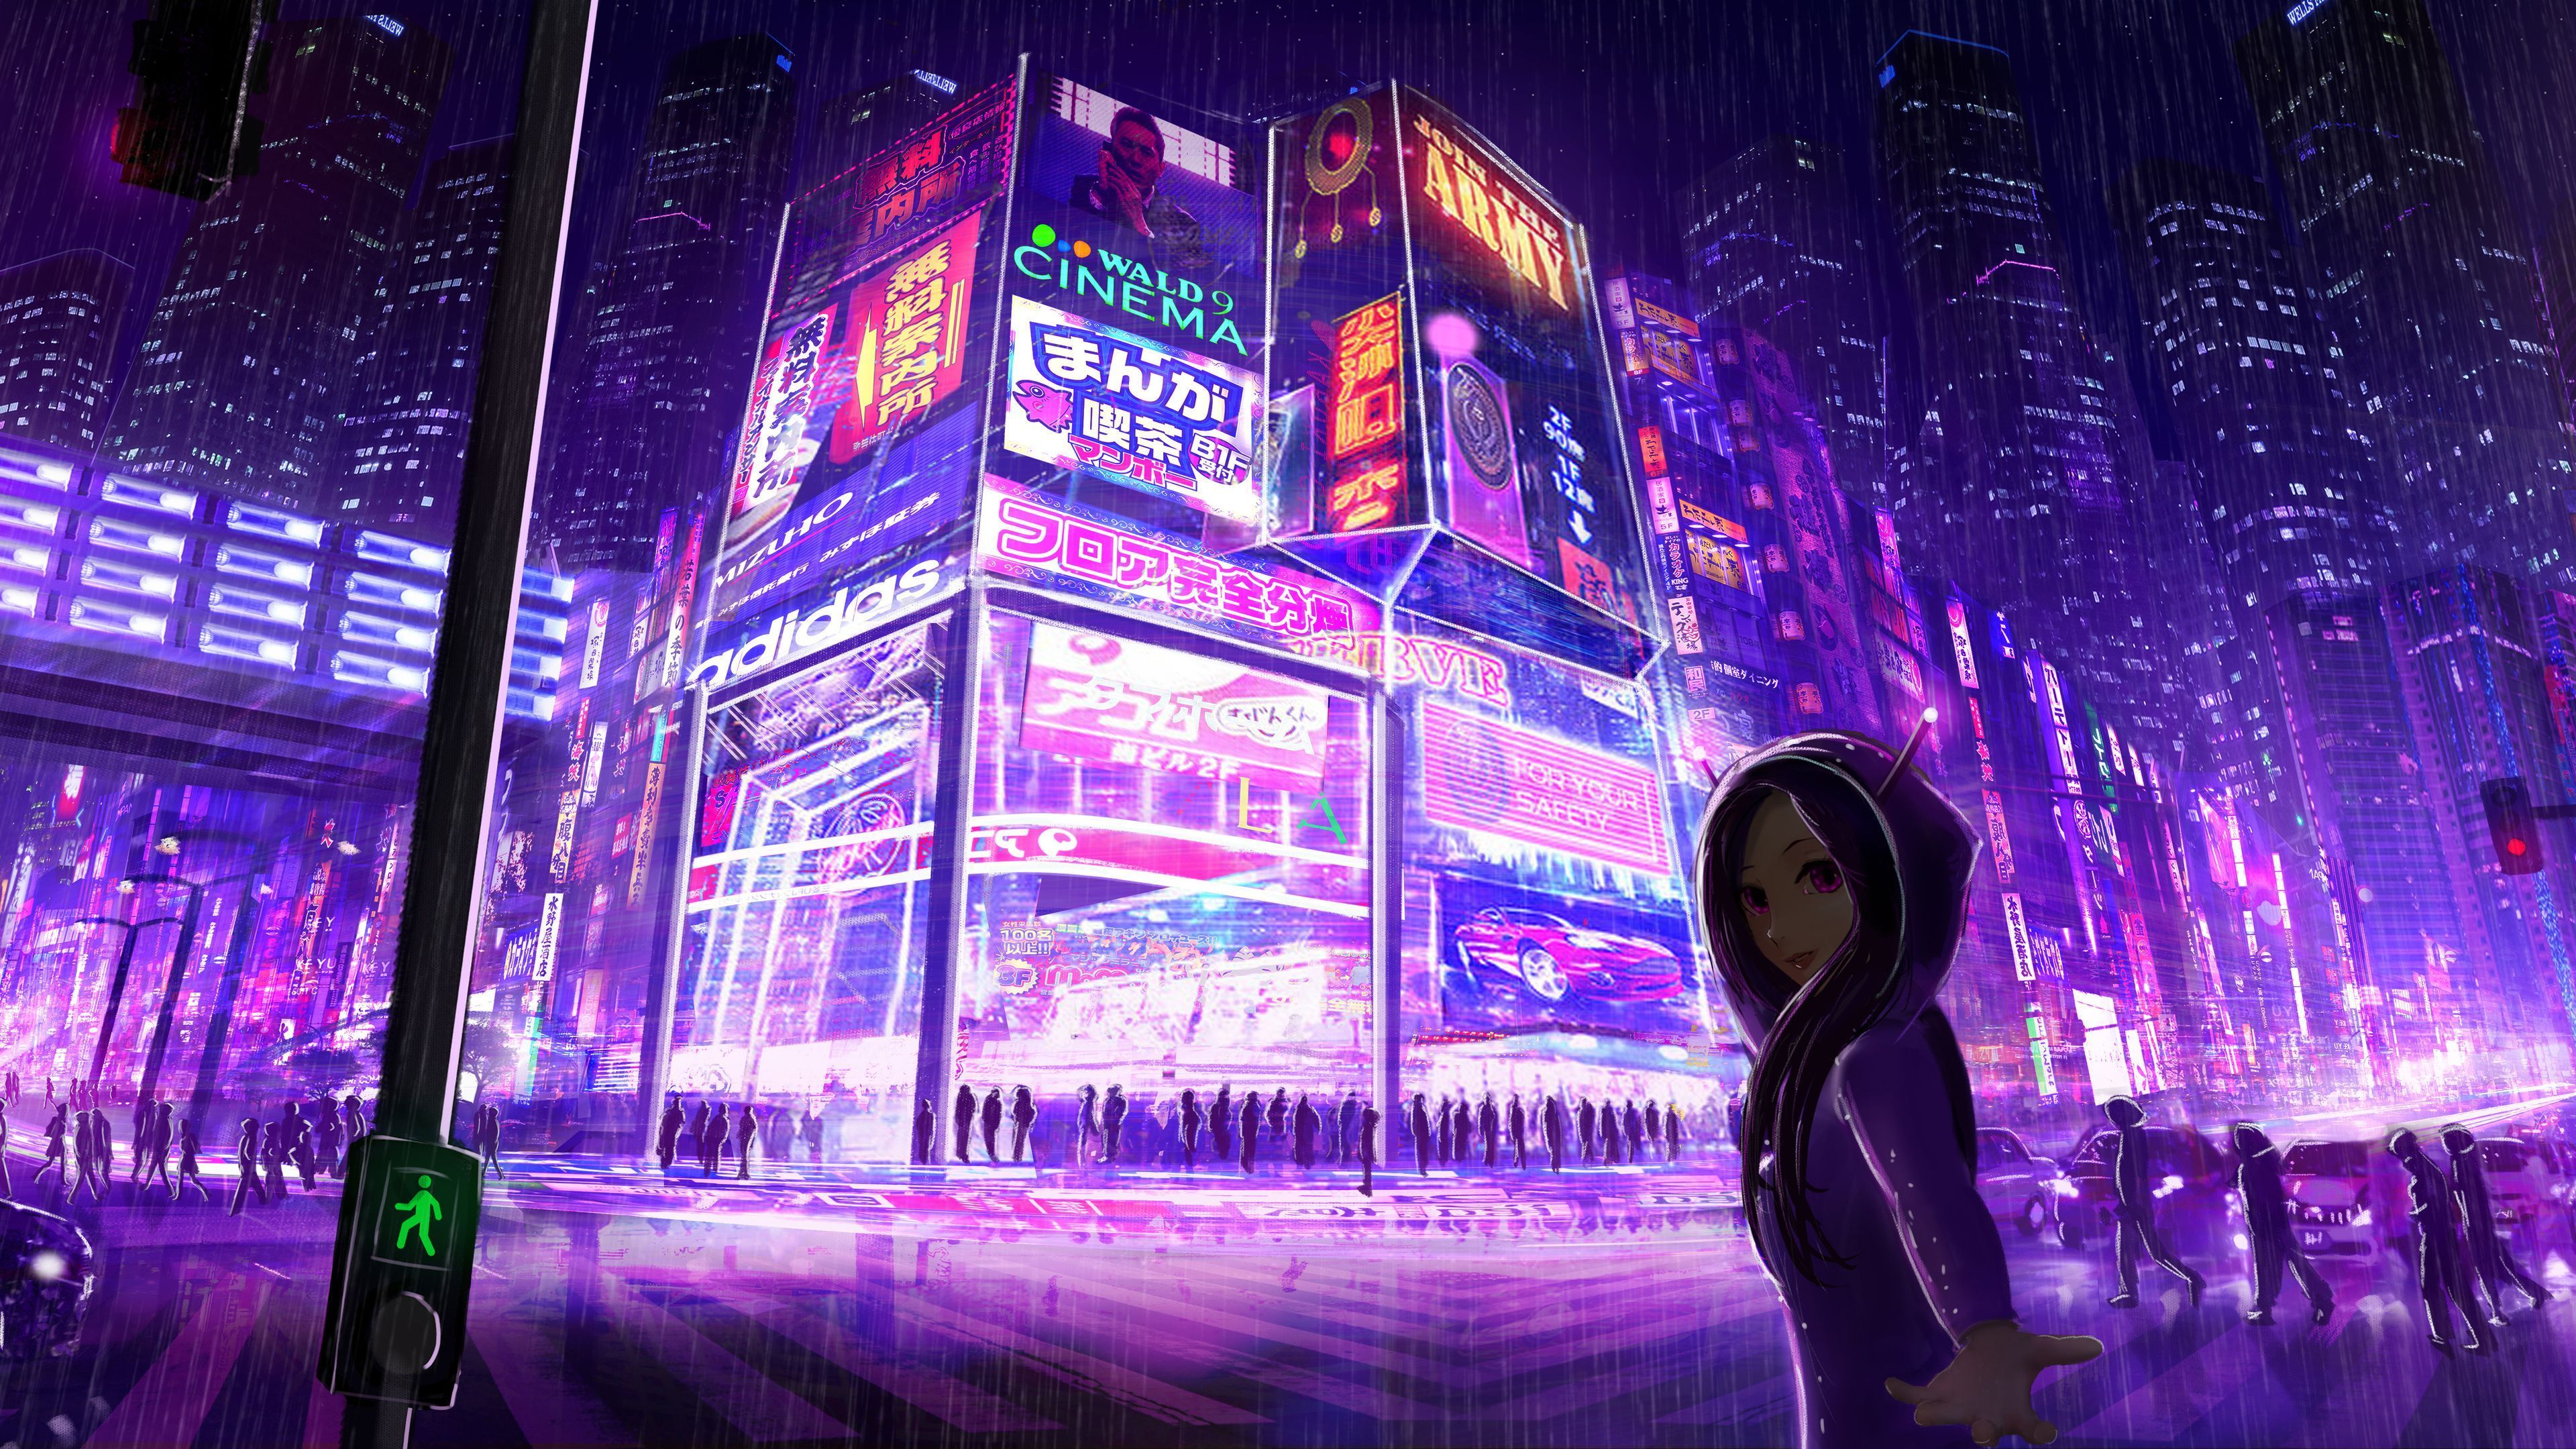 Cyberpunk Anime City Wallpaper Free Cyberpunk Anime City Background